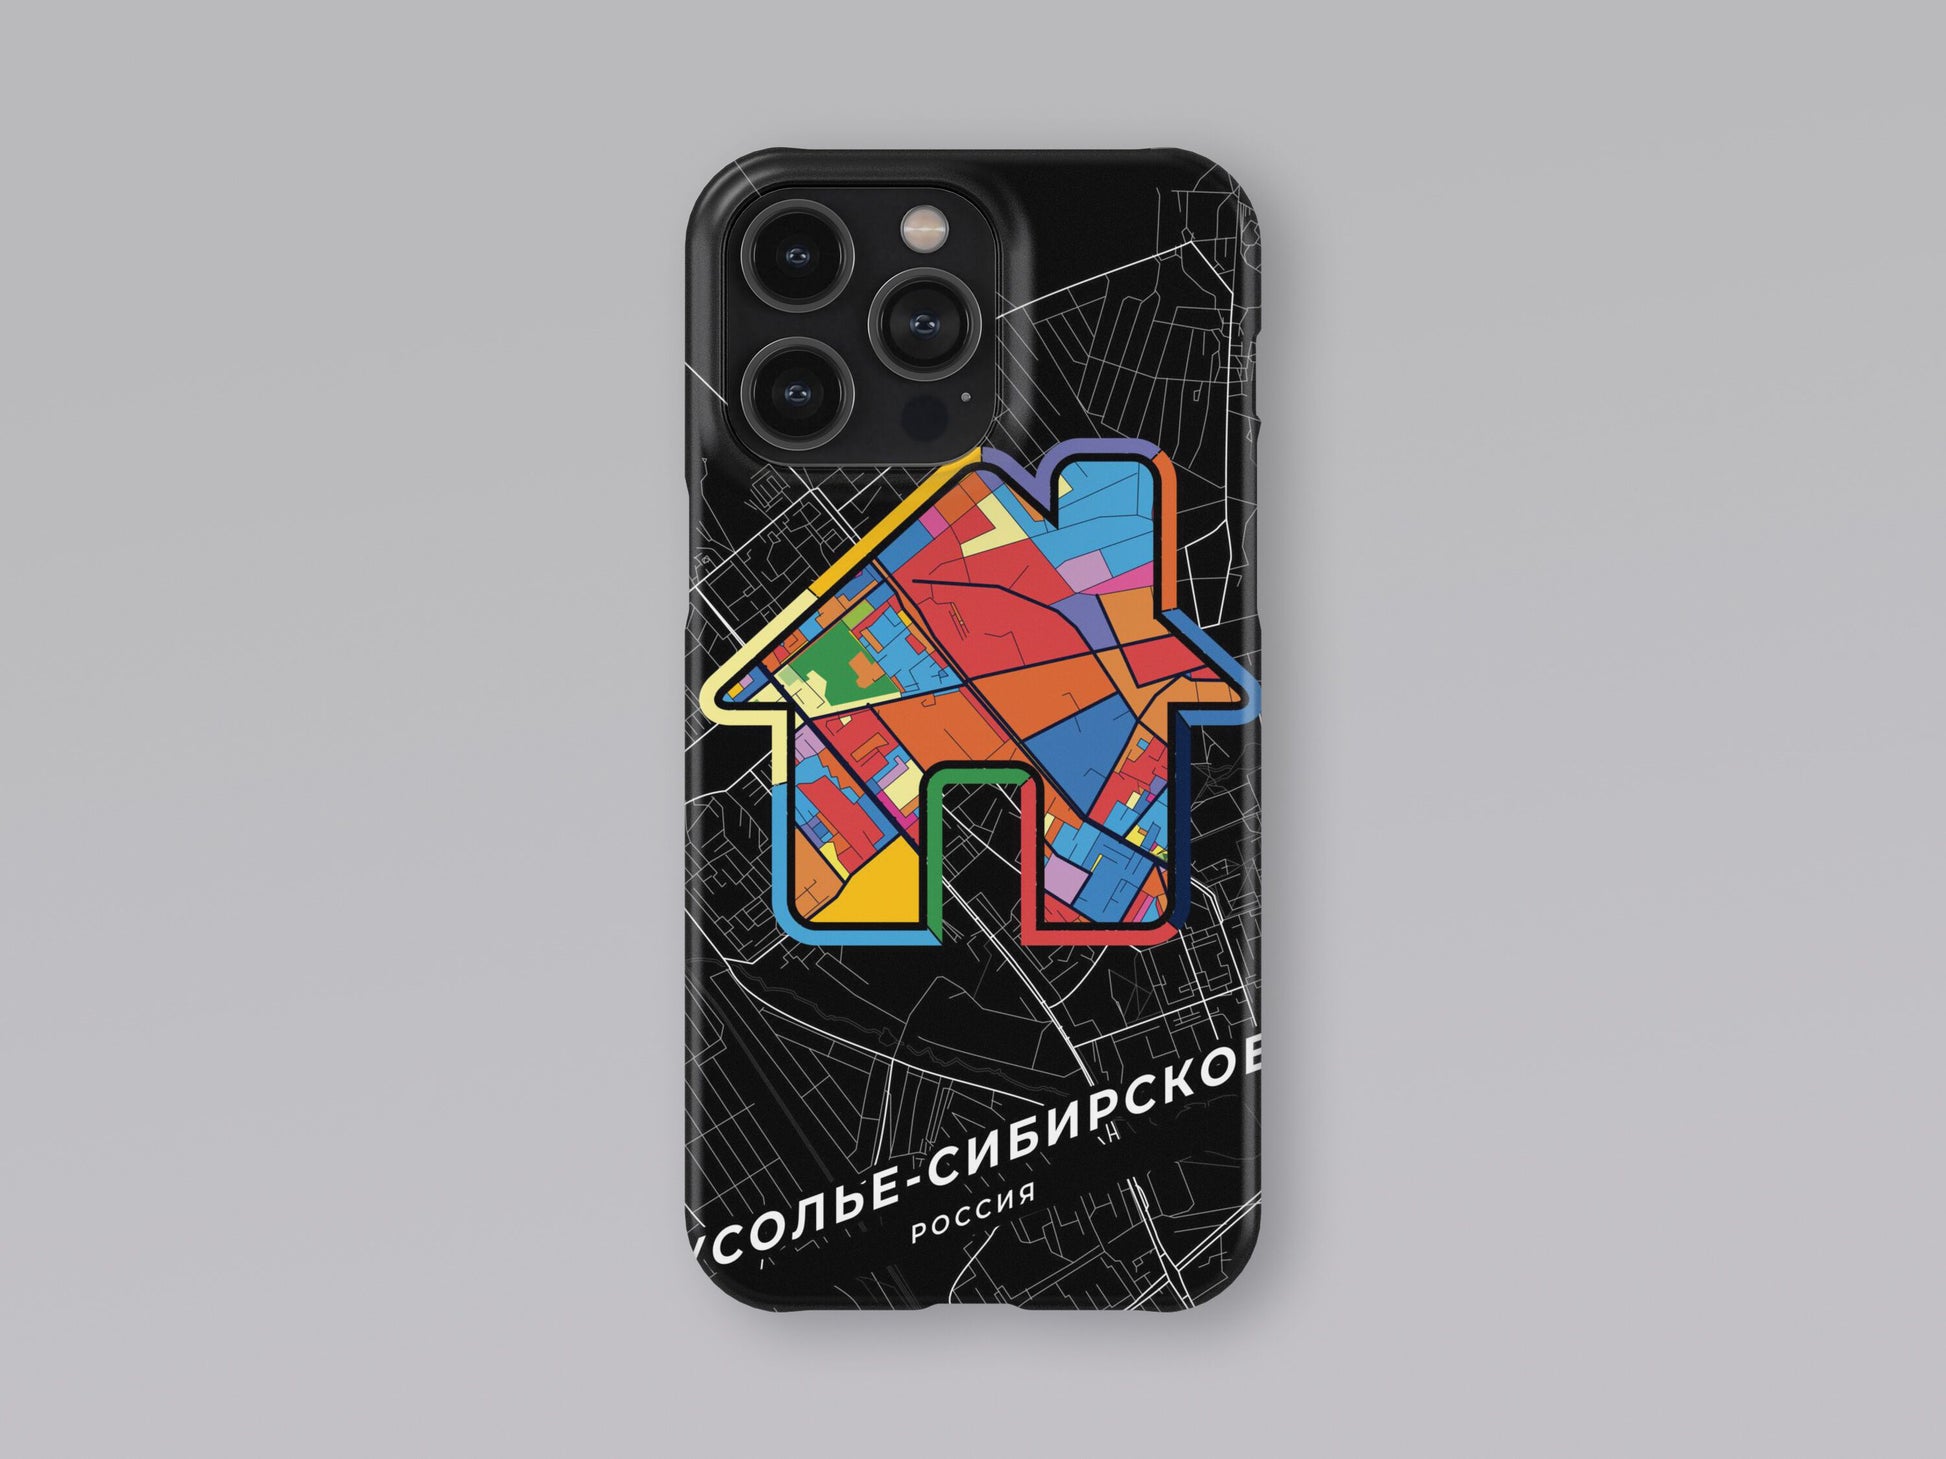 Usolye-Sibirskoye Russia slim phone case with colorful icon 3